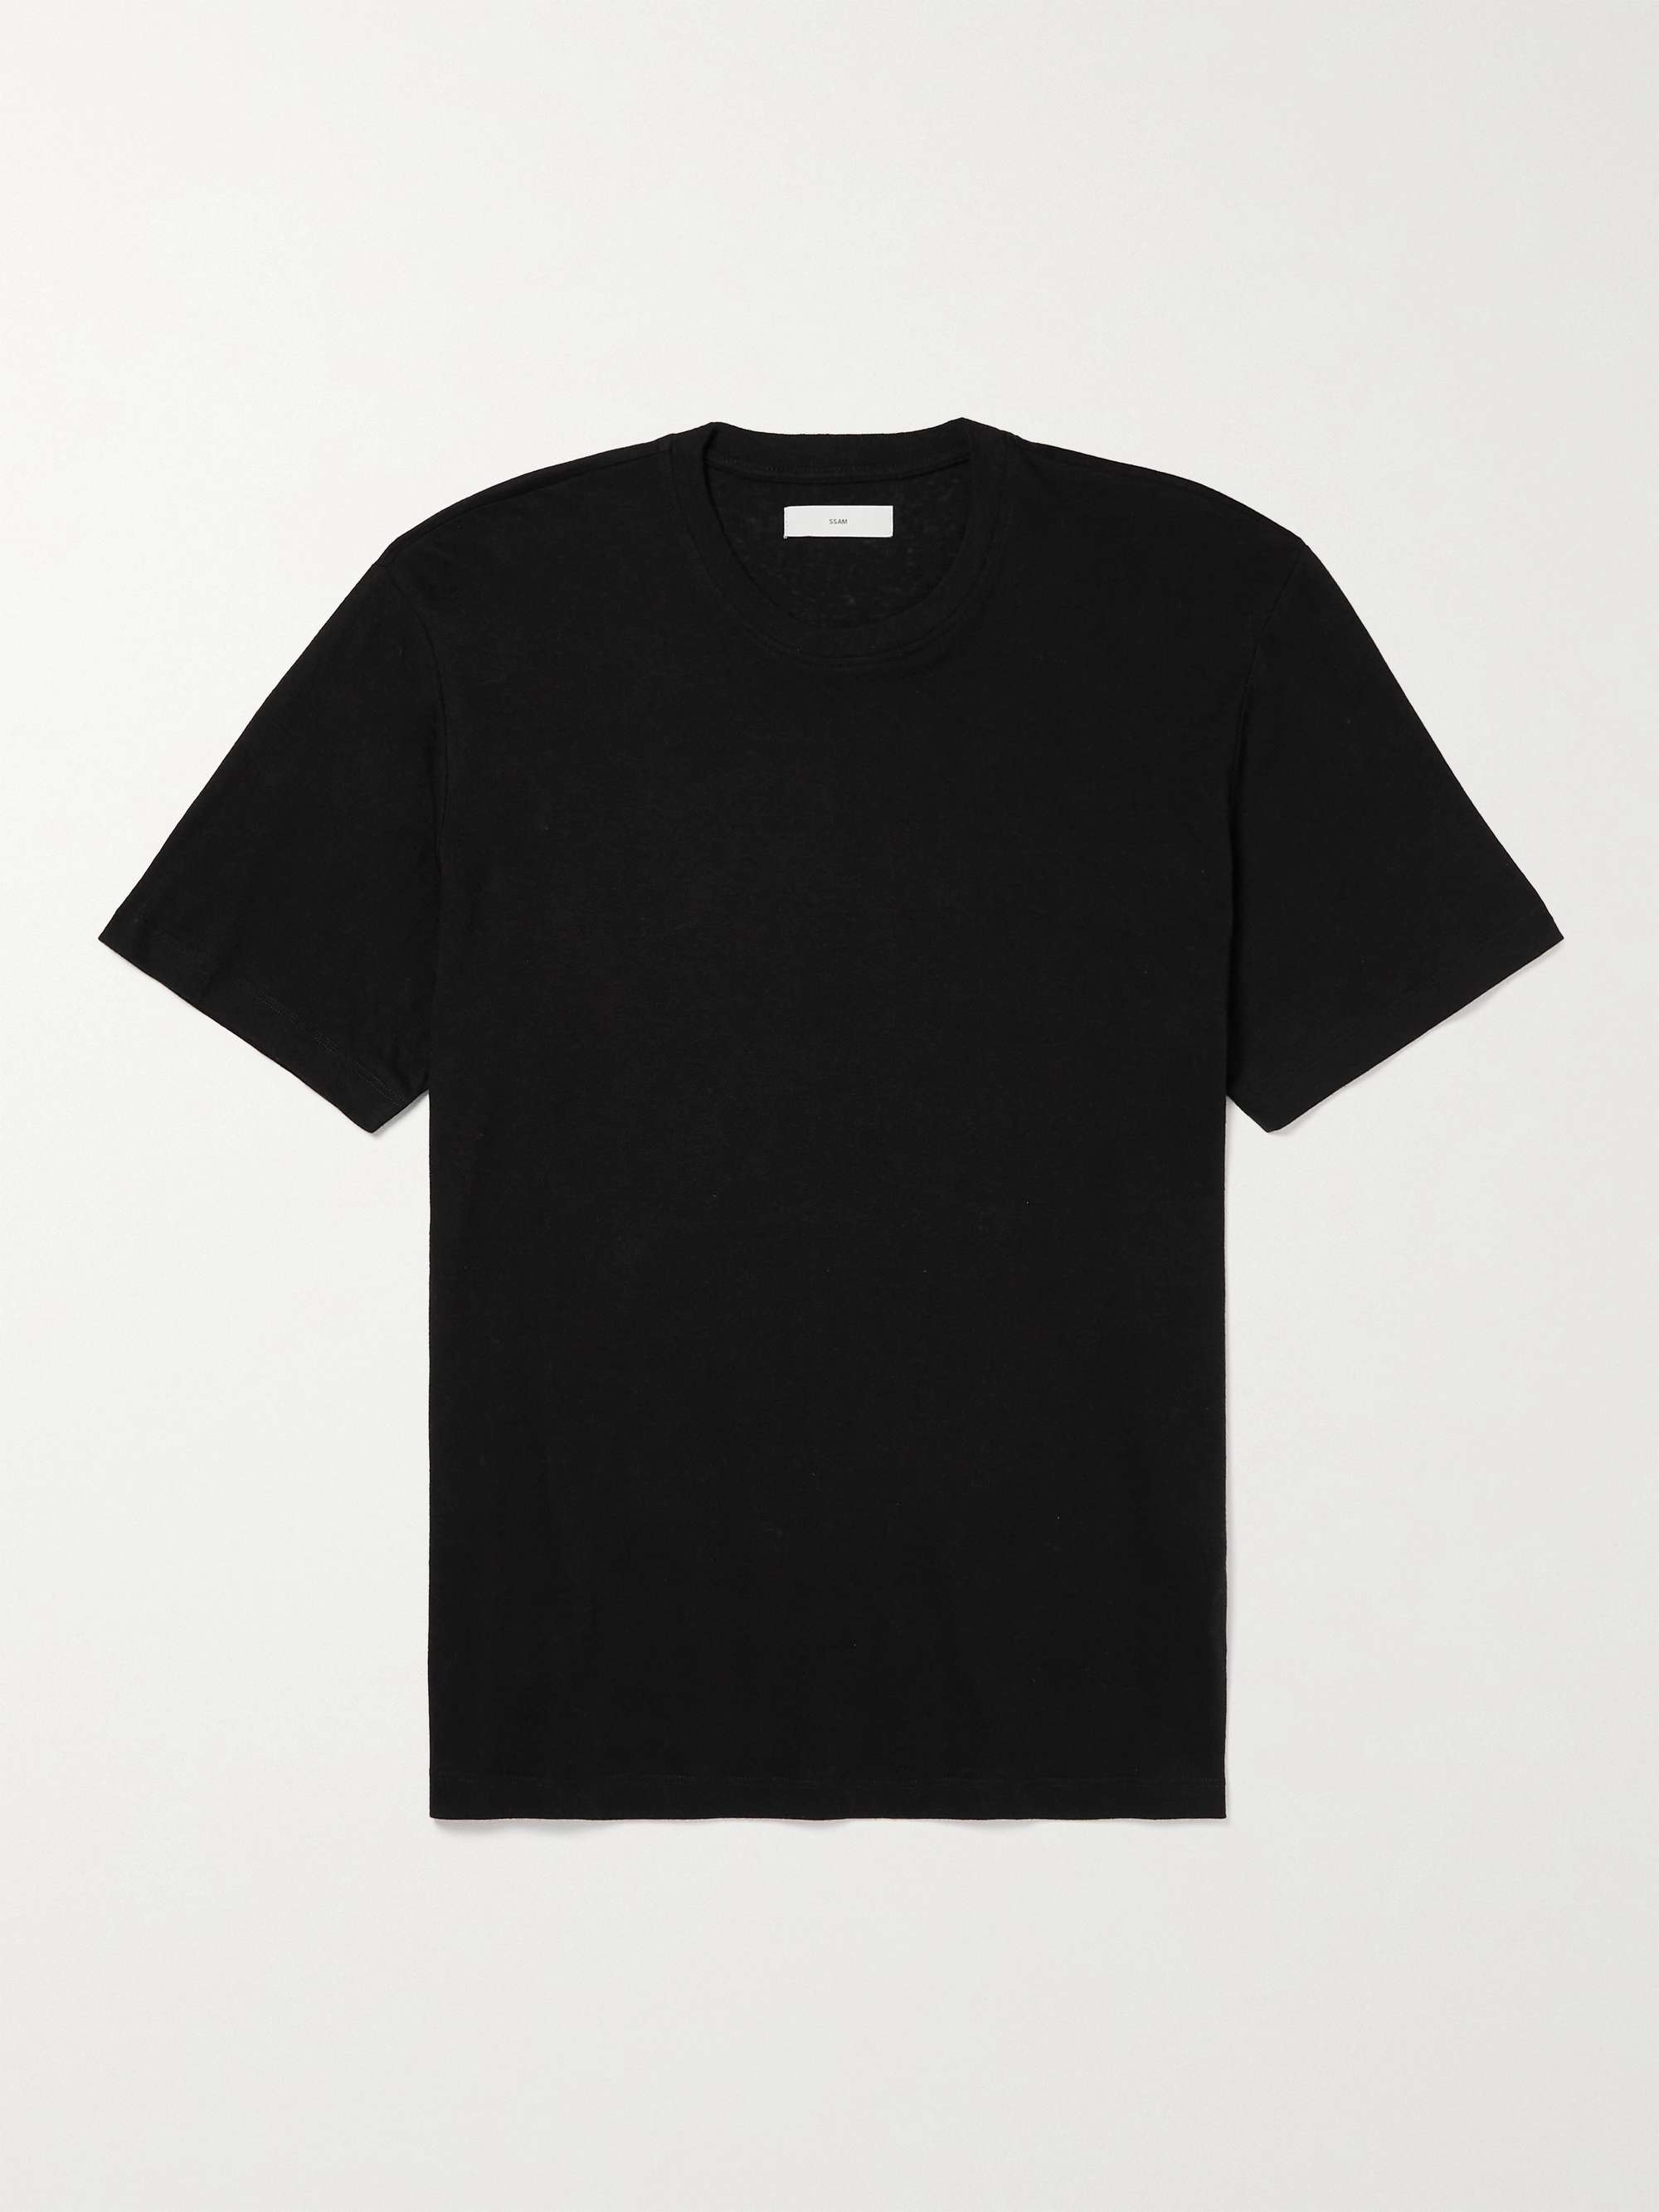 SSAM Luca Cotton and Cashmere-Blend Jersey T-Shirt